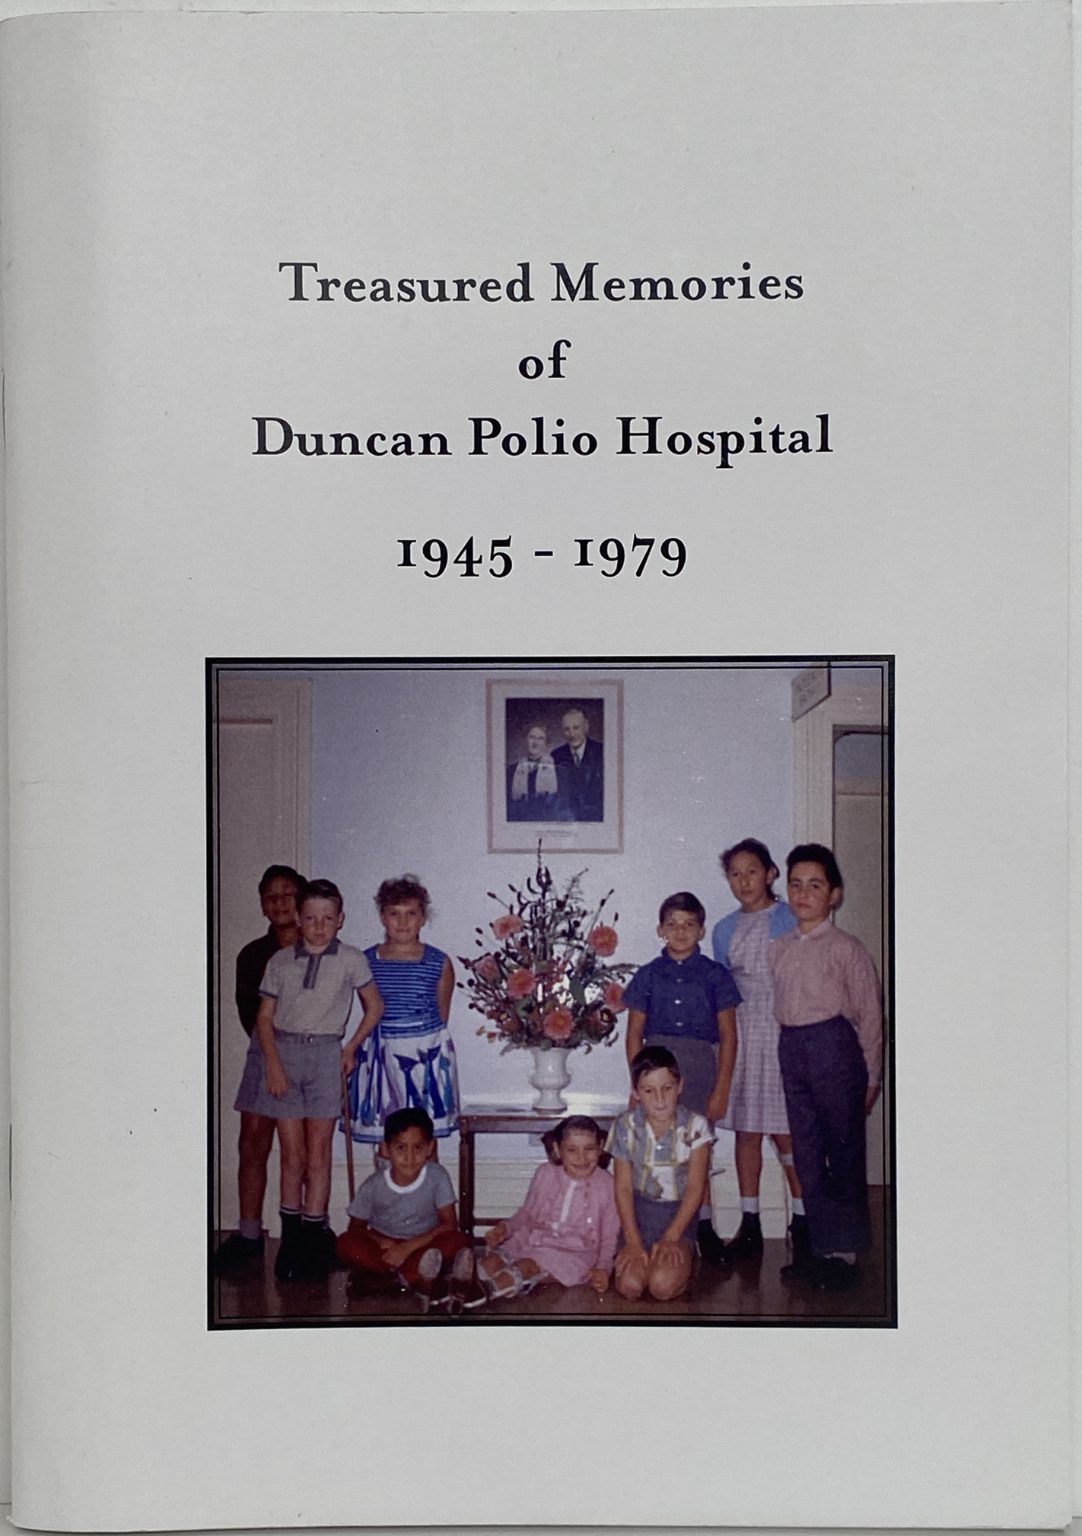 Treasured Memories of Duncan Polio Hospital 1945 - 1979